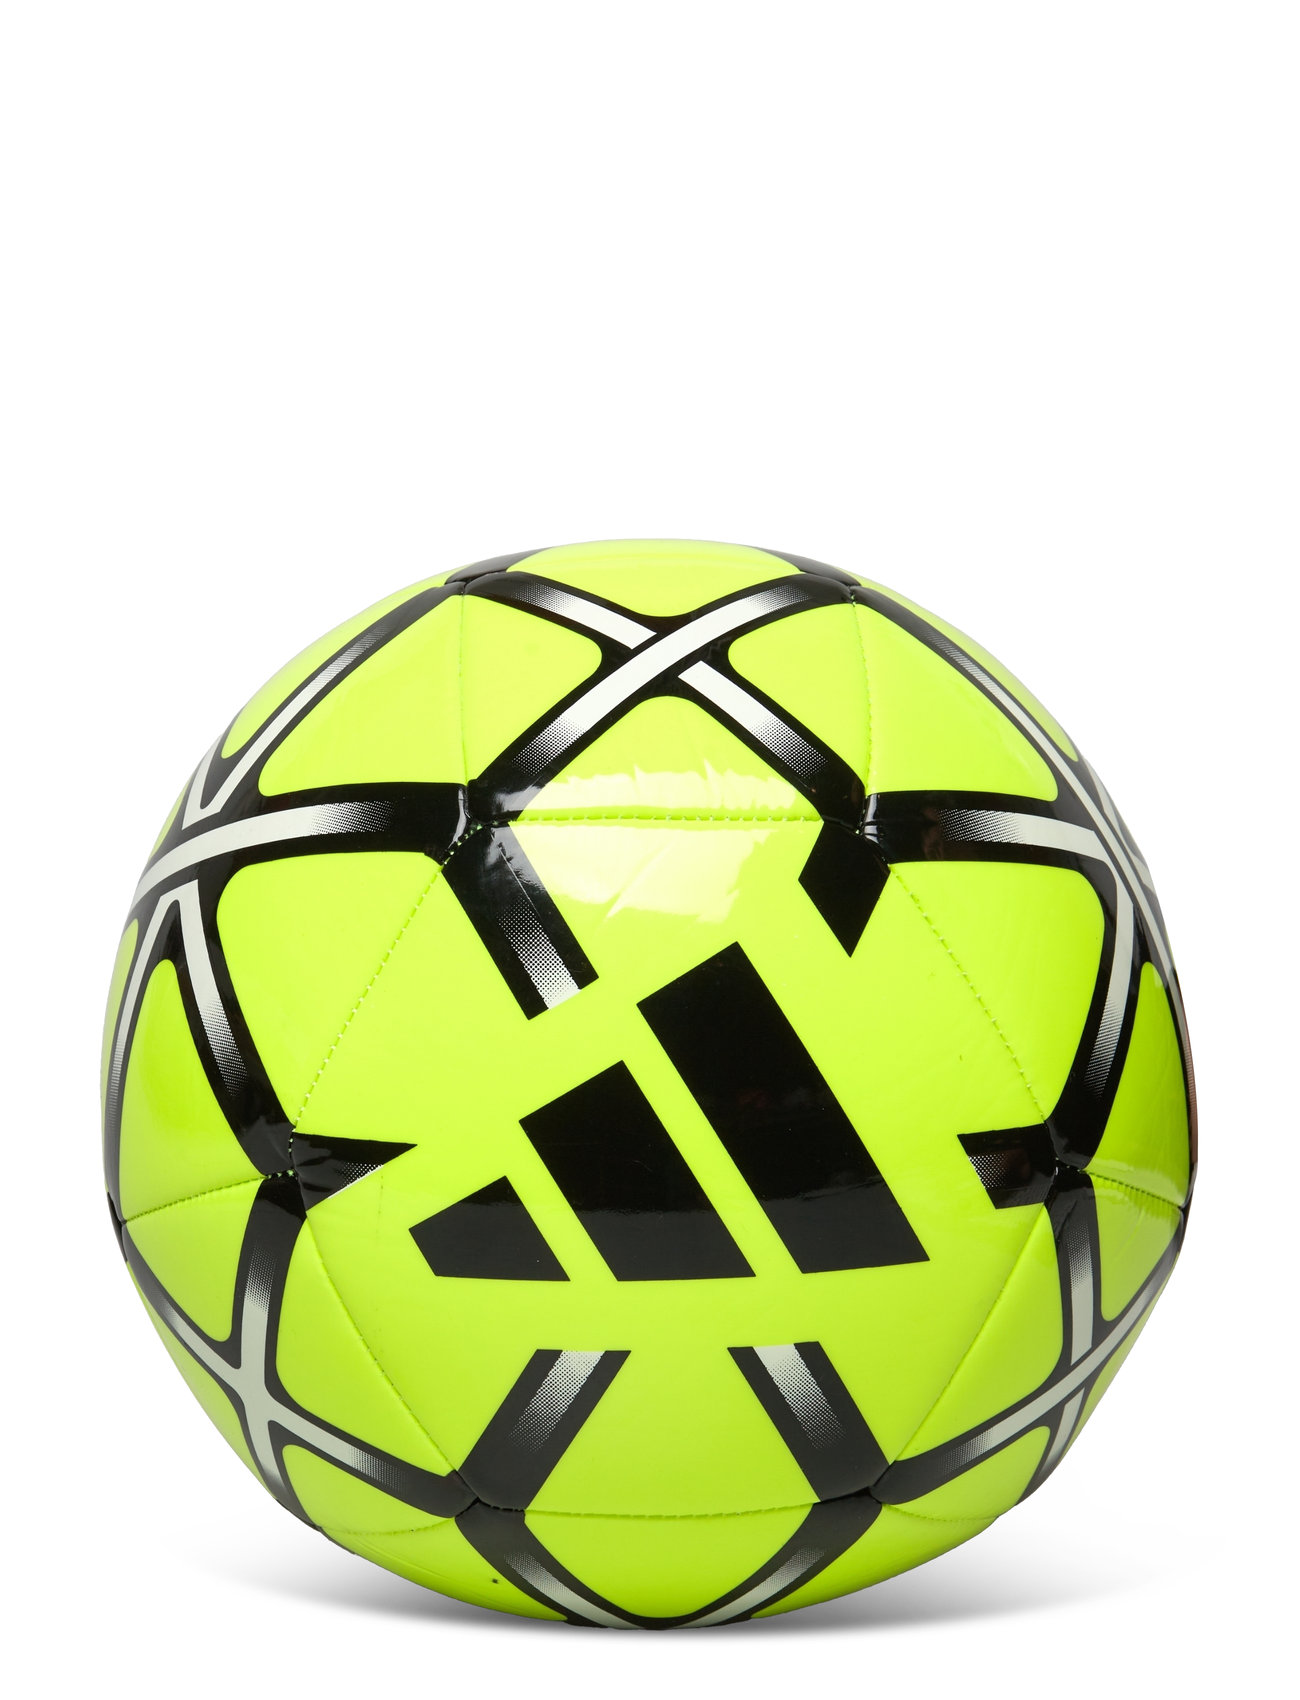 Starlancer Clb Sport Sports Equipment Football Equipment Football Balls Green Adidas Performance